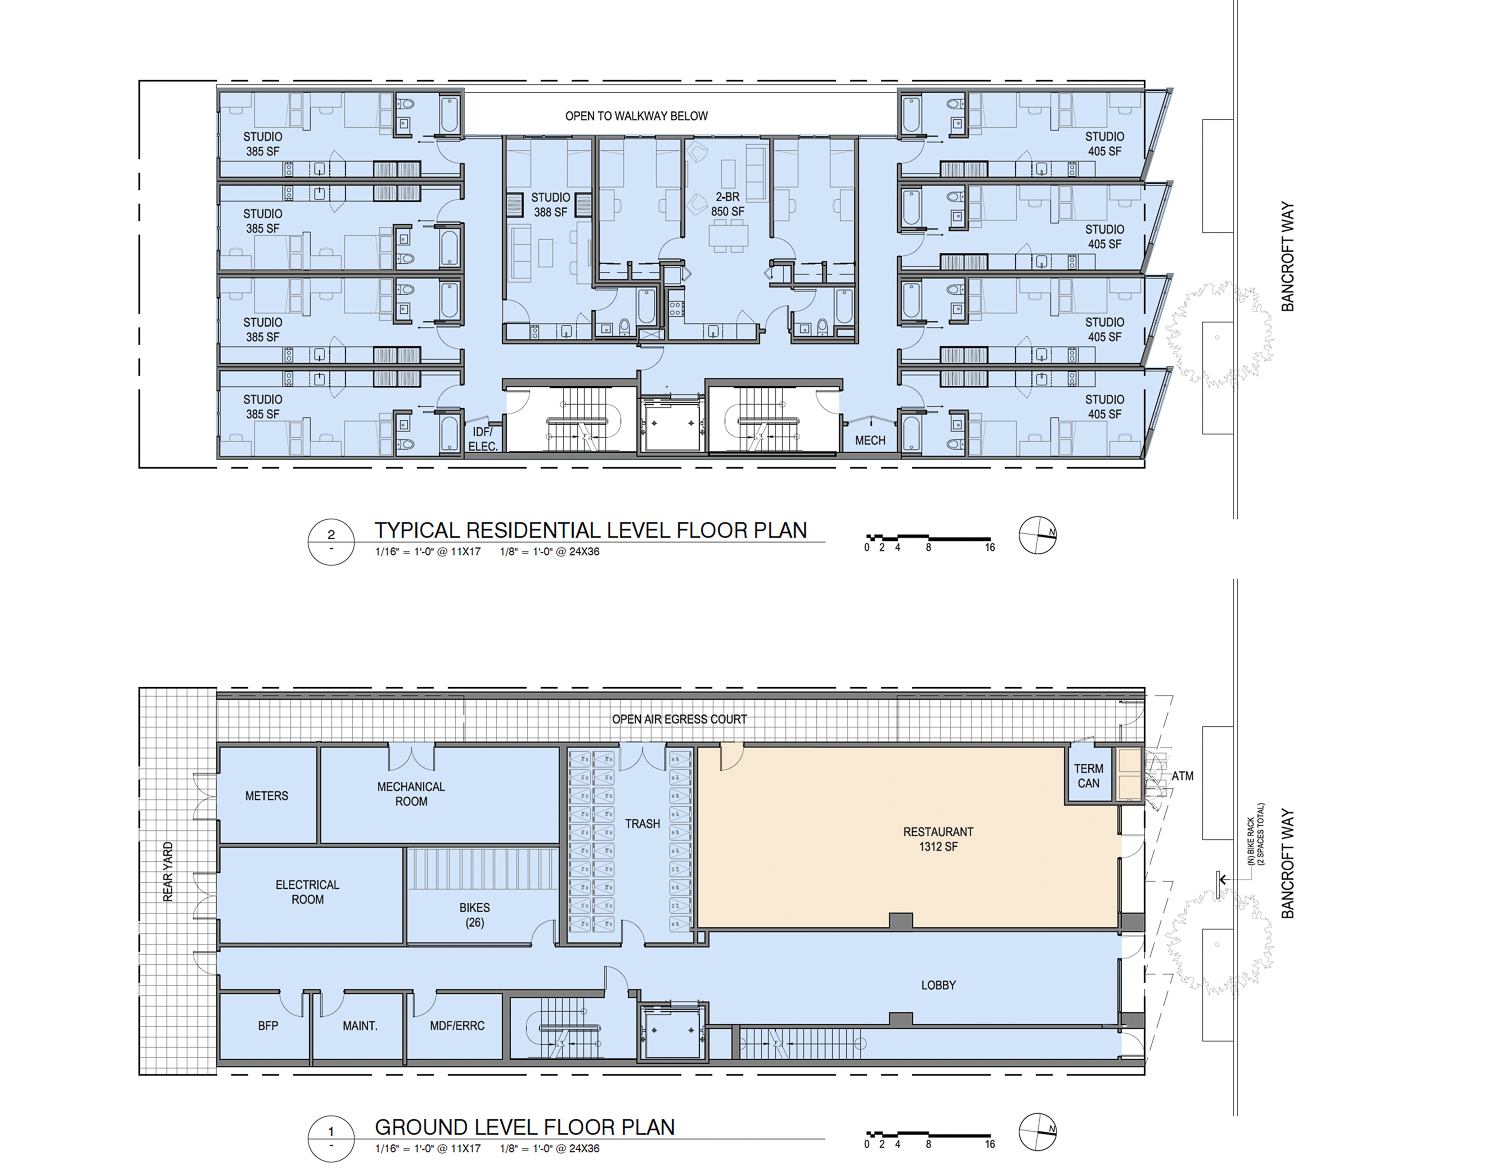 2462 Bancroft Way floor plans, illustration by Trachtenberg Architects